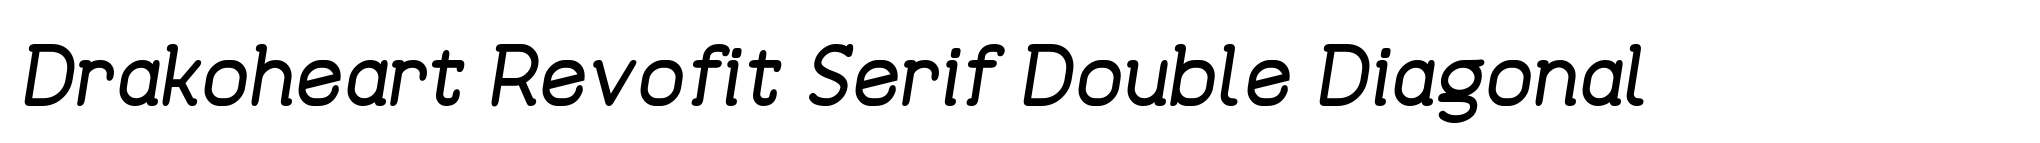 Drakoheart Revofit Serif Double Diagonal image